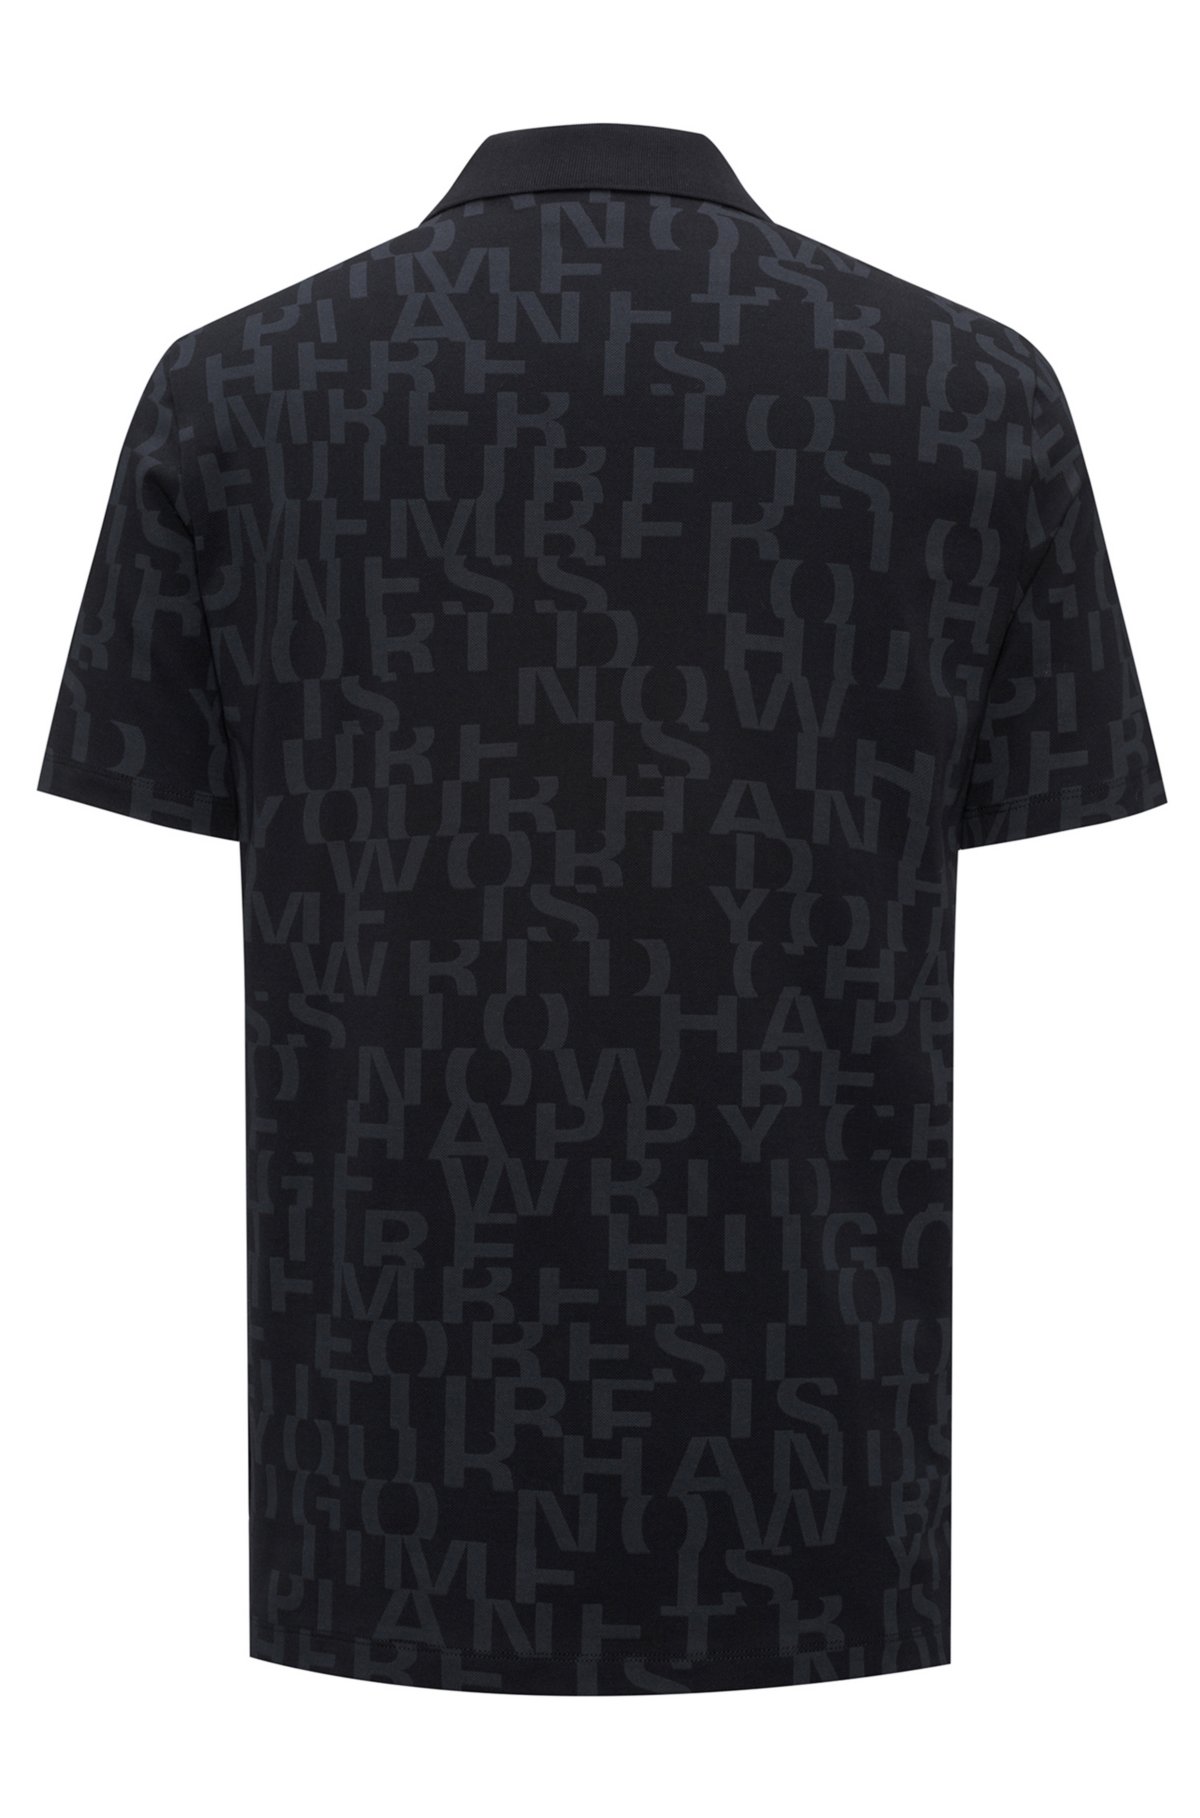 Authentic+Louis+Vuitton+Allover+Logos+Printed+T-shirt+Black+Size+M